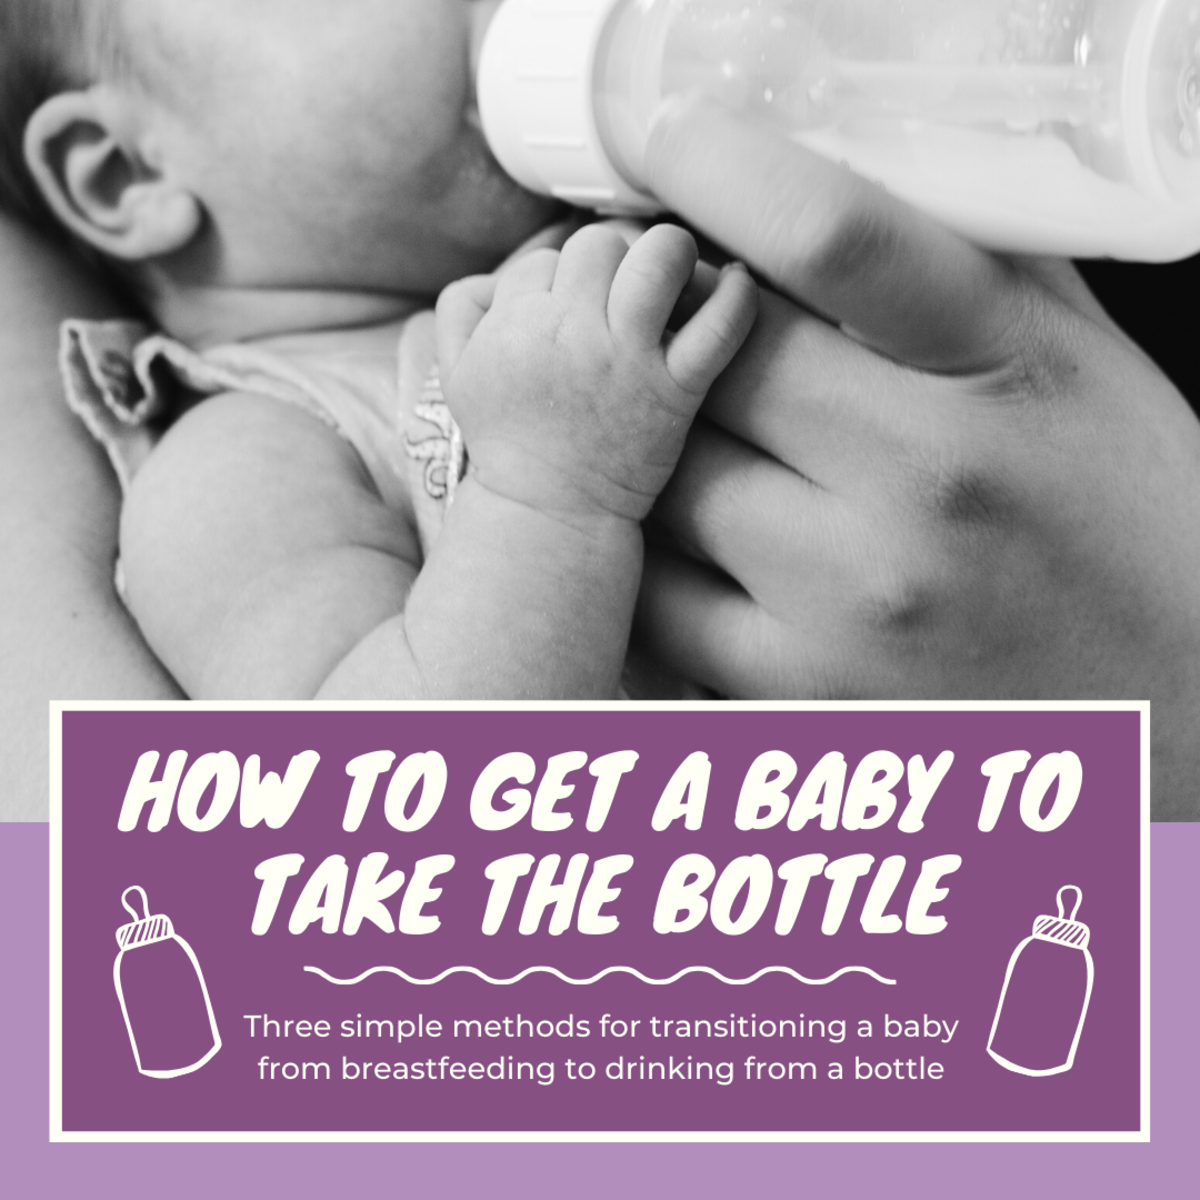 baby refusing bottle 5 months